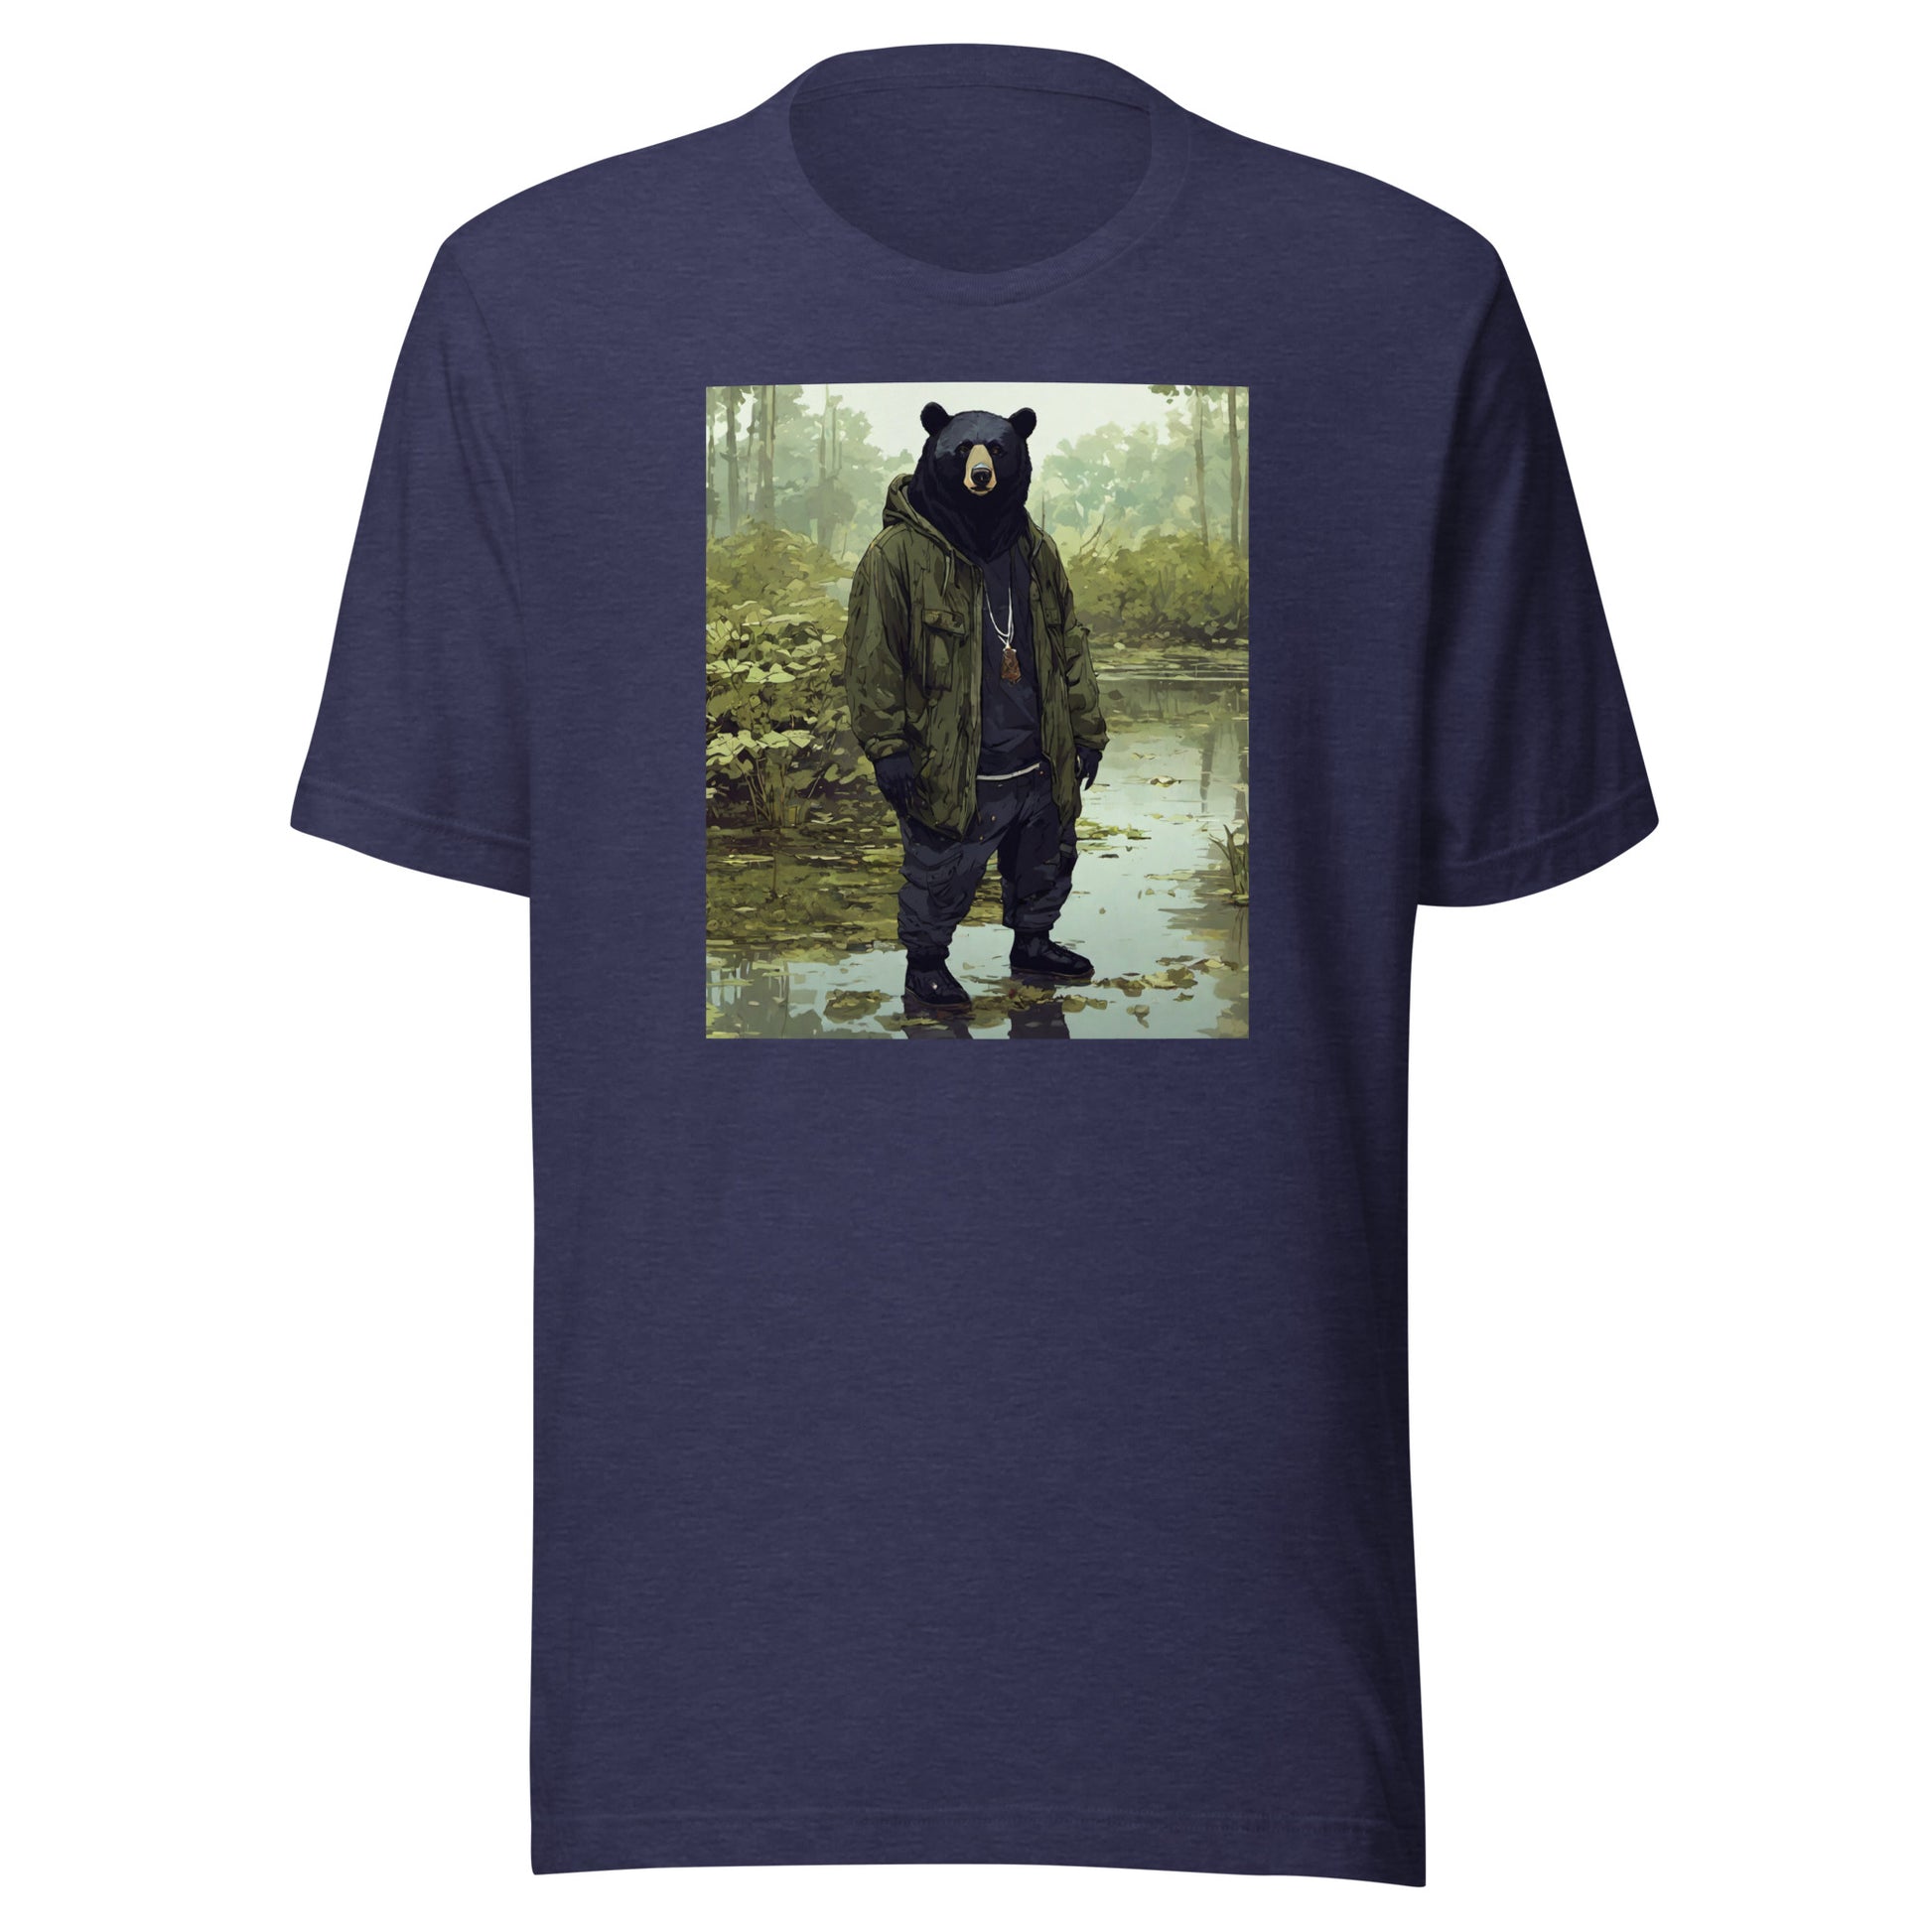 Stoic Black Bear Men's Graphic T-Shirt Heather Midnight Navy